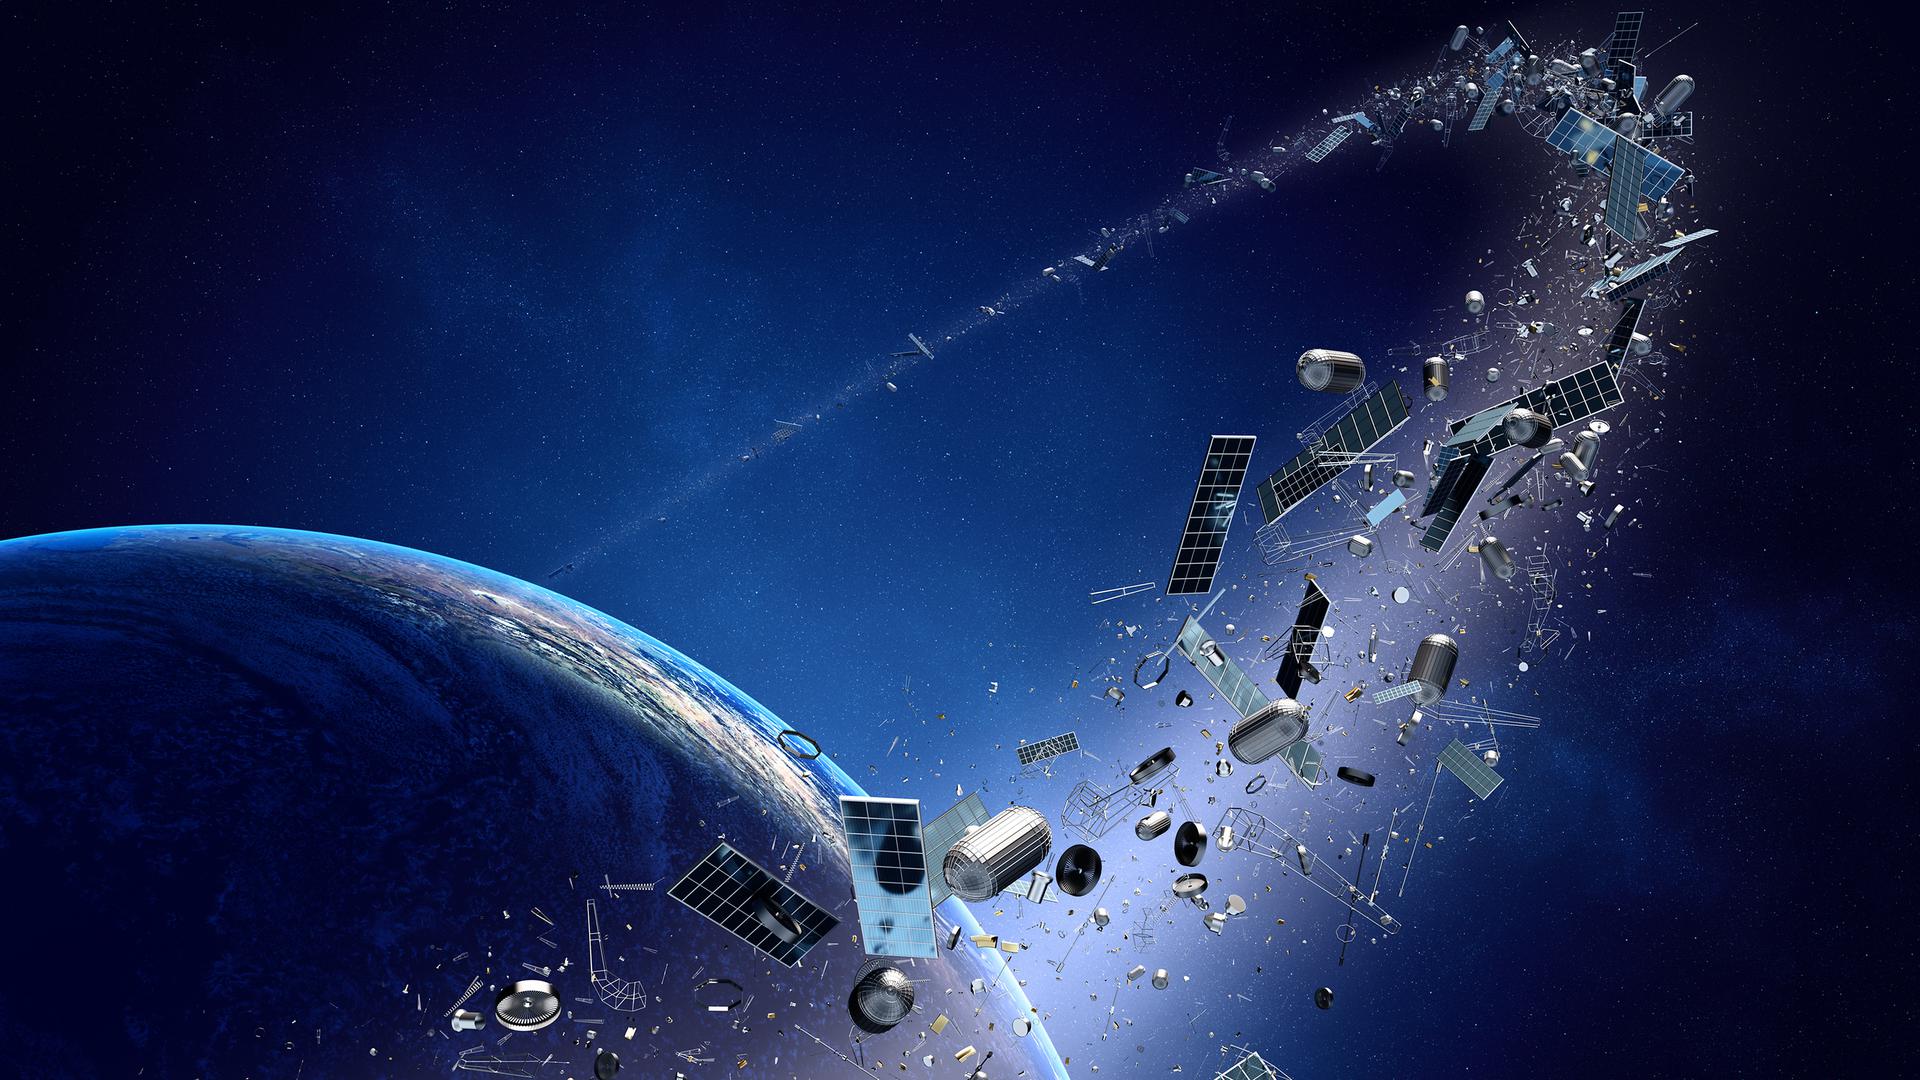 Space debris orbiting the earth